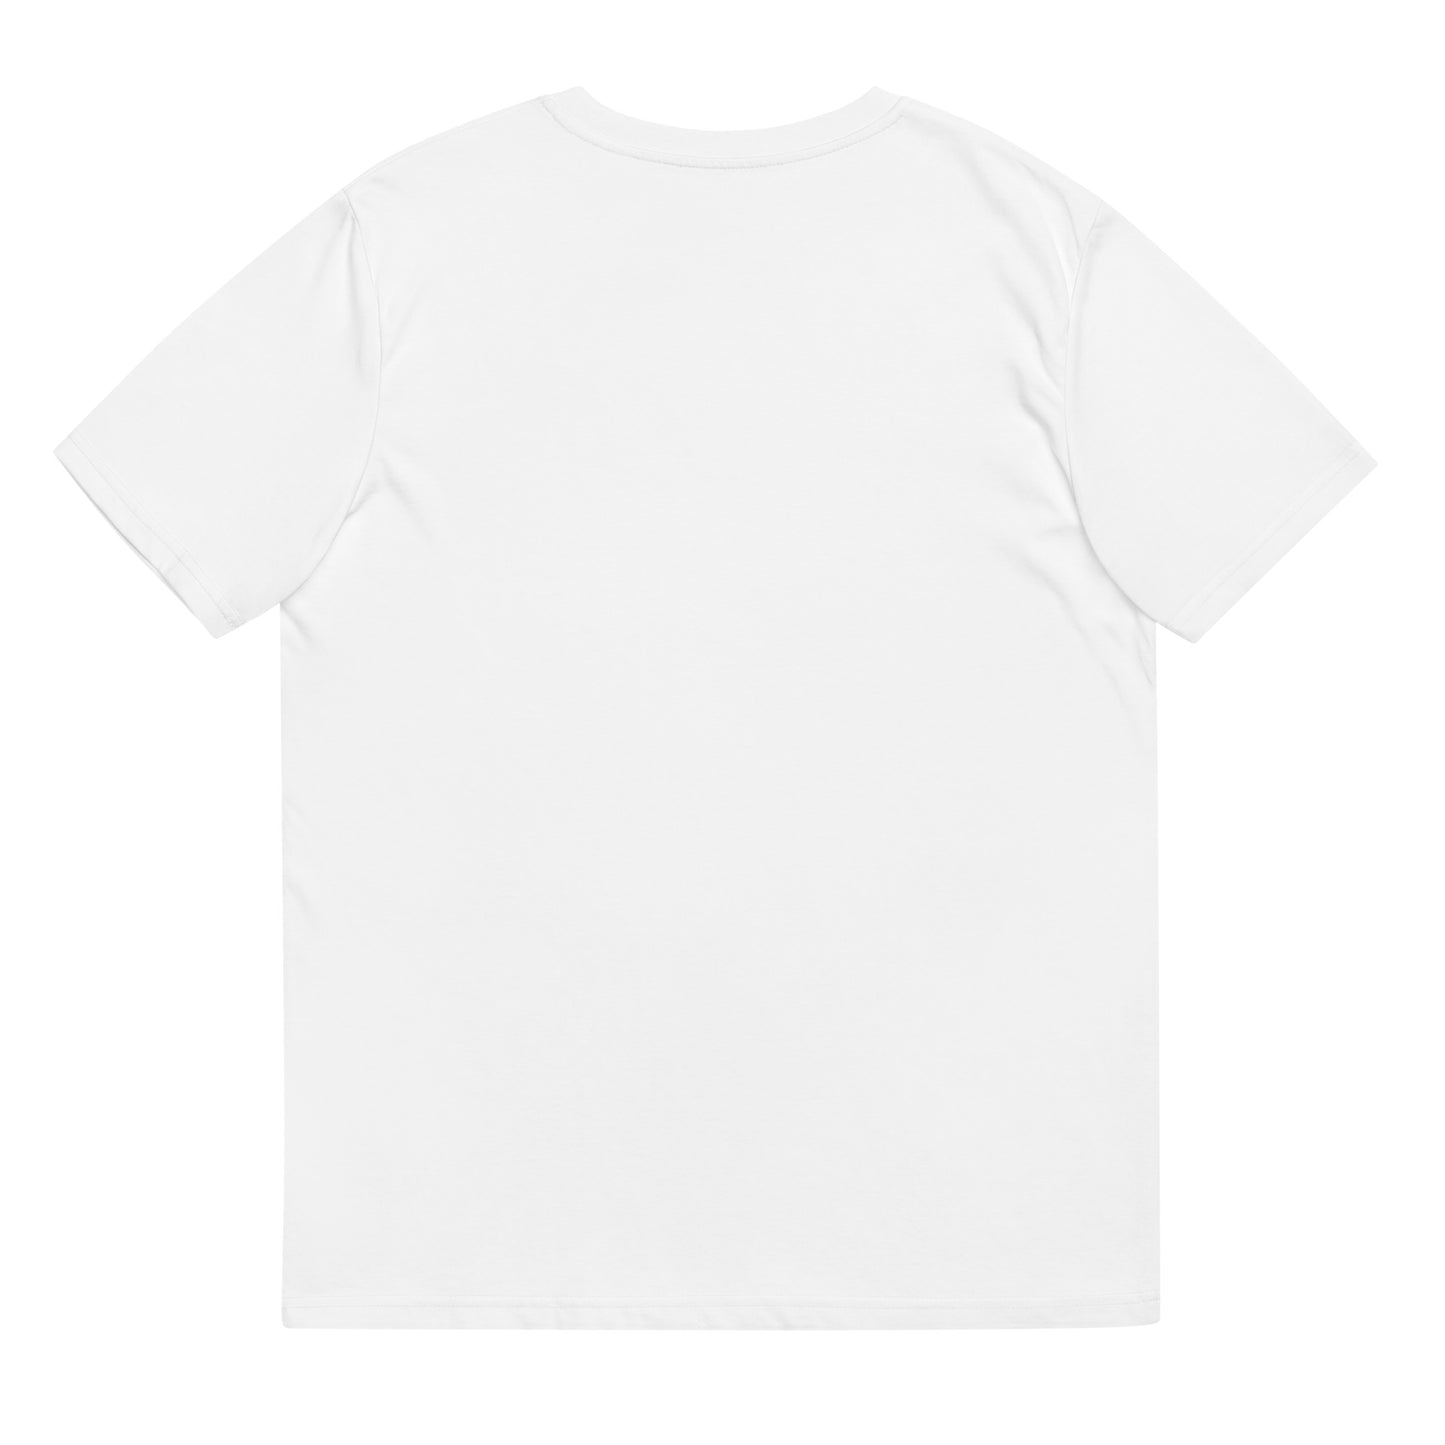 Jada in the Stars - Unisex Organic Cotton T-Shirt